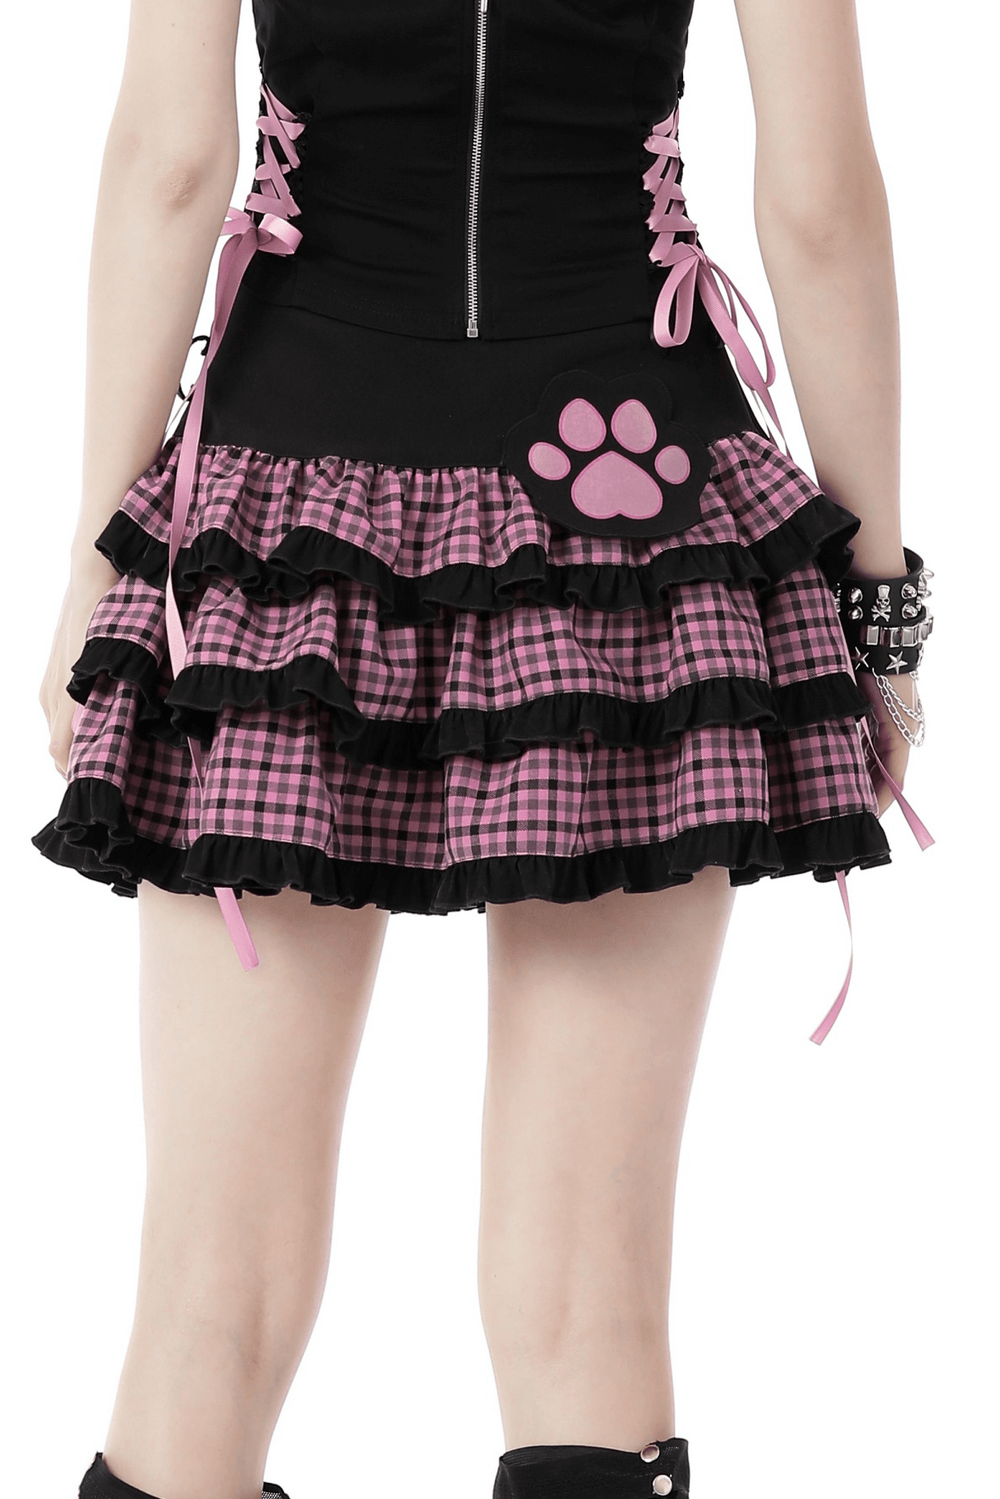 Stylish Plaid Ruffled Skirt with Paw Print Detail